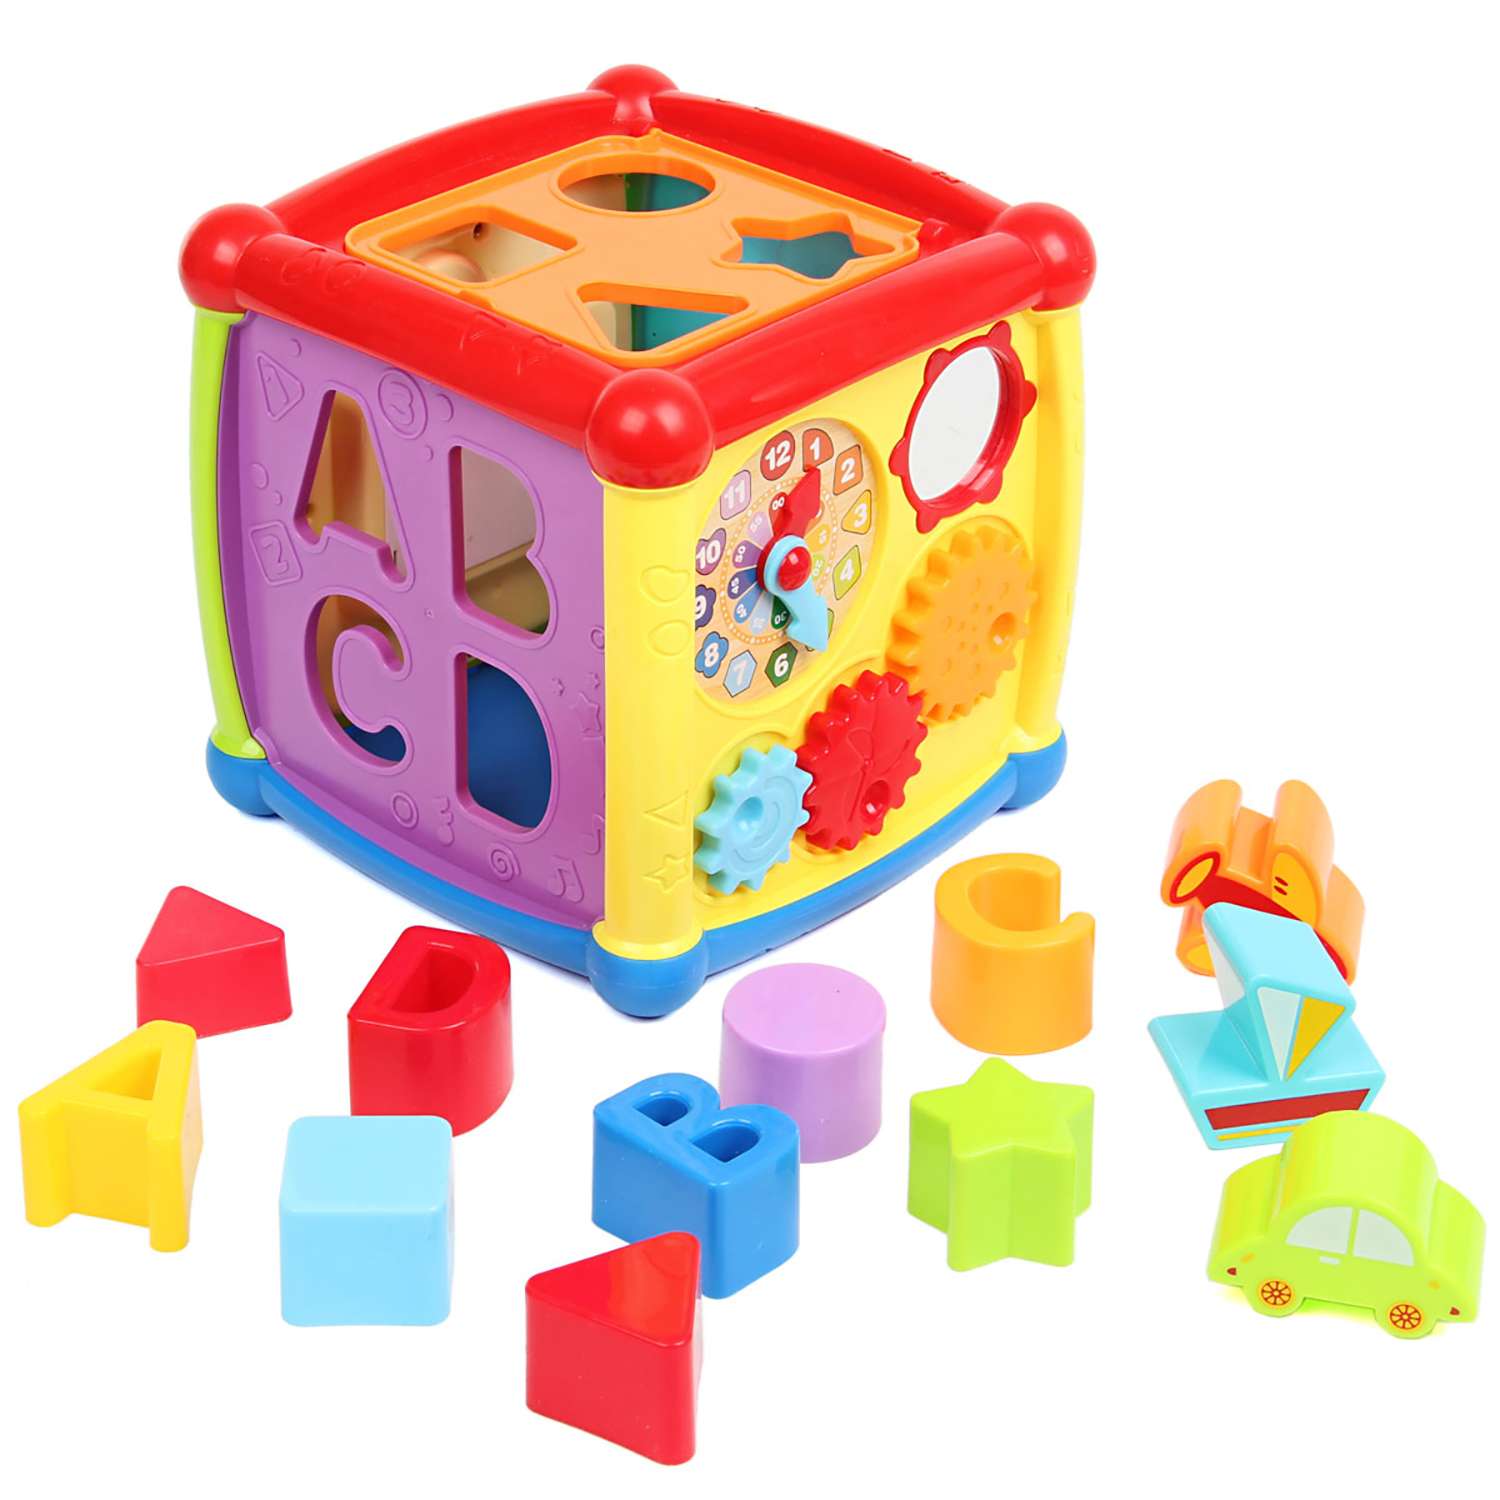 Кубы сортеры. Детские развивающие кубики-сортеры 72403. Игрушка-сортер ABC куб bh2107. Сортер veld co умный домик. Куб сортер Playskool.